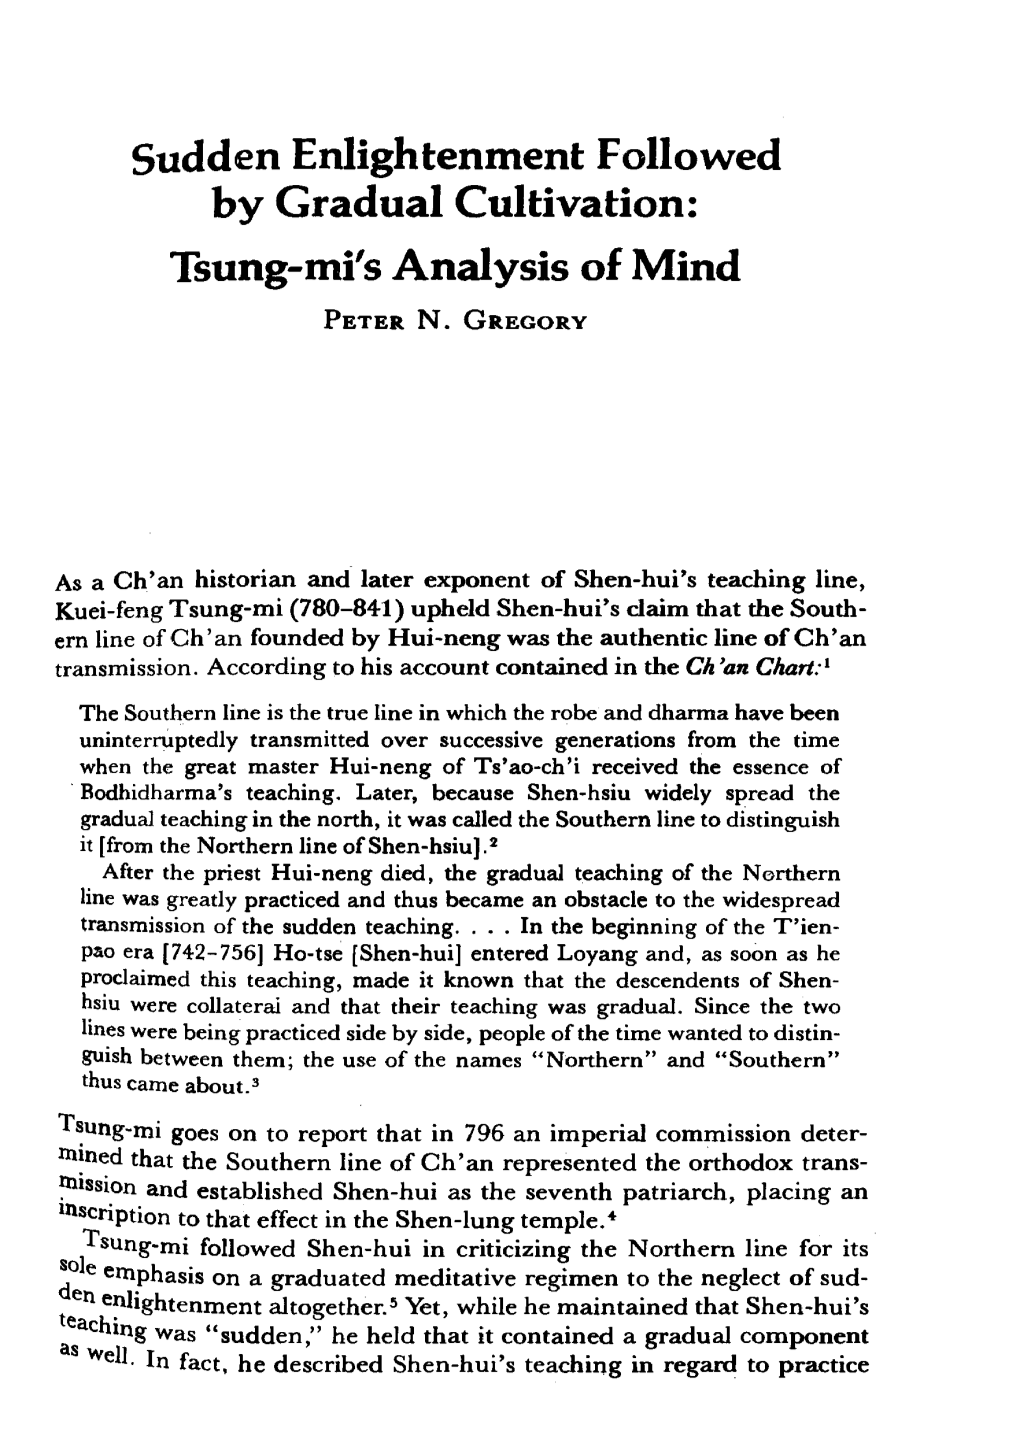 Sudden Enlightenment Followed by Gradual Cultivation: Tsung-Mi's Analysis of Mind